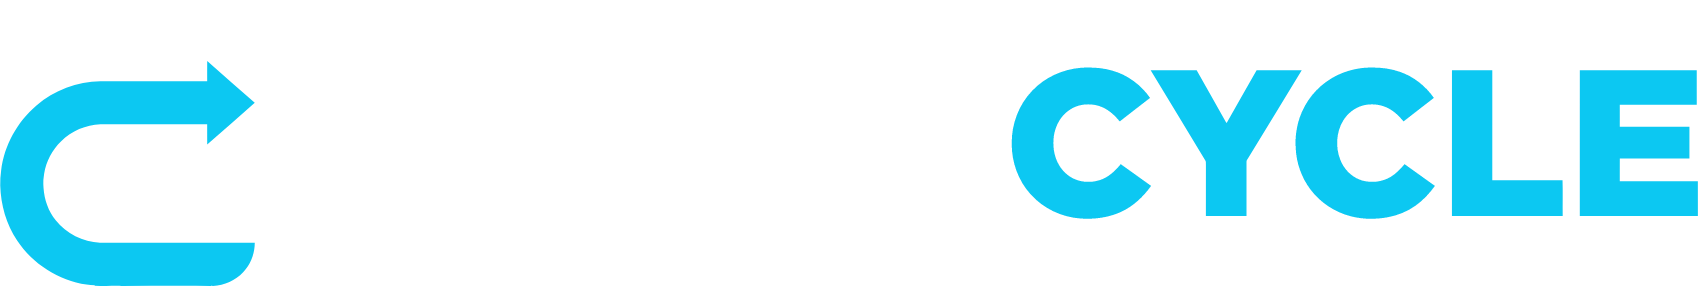 PureCycle Technologies Logo groß für dunkle Hintergründe (transparentes PNG)